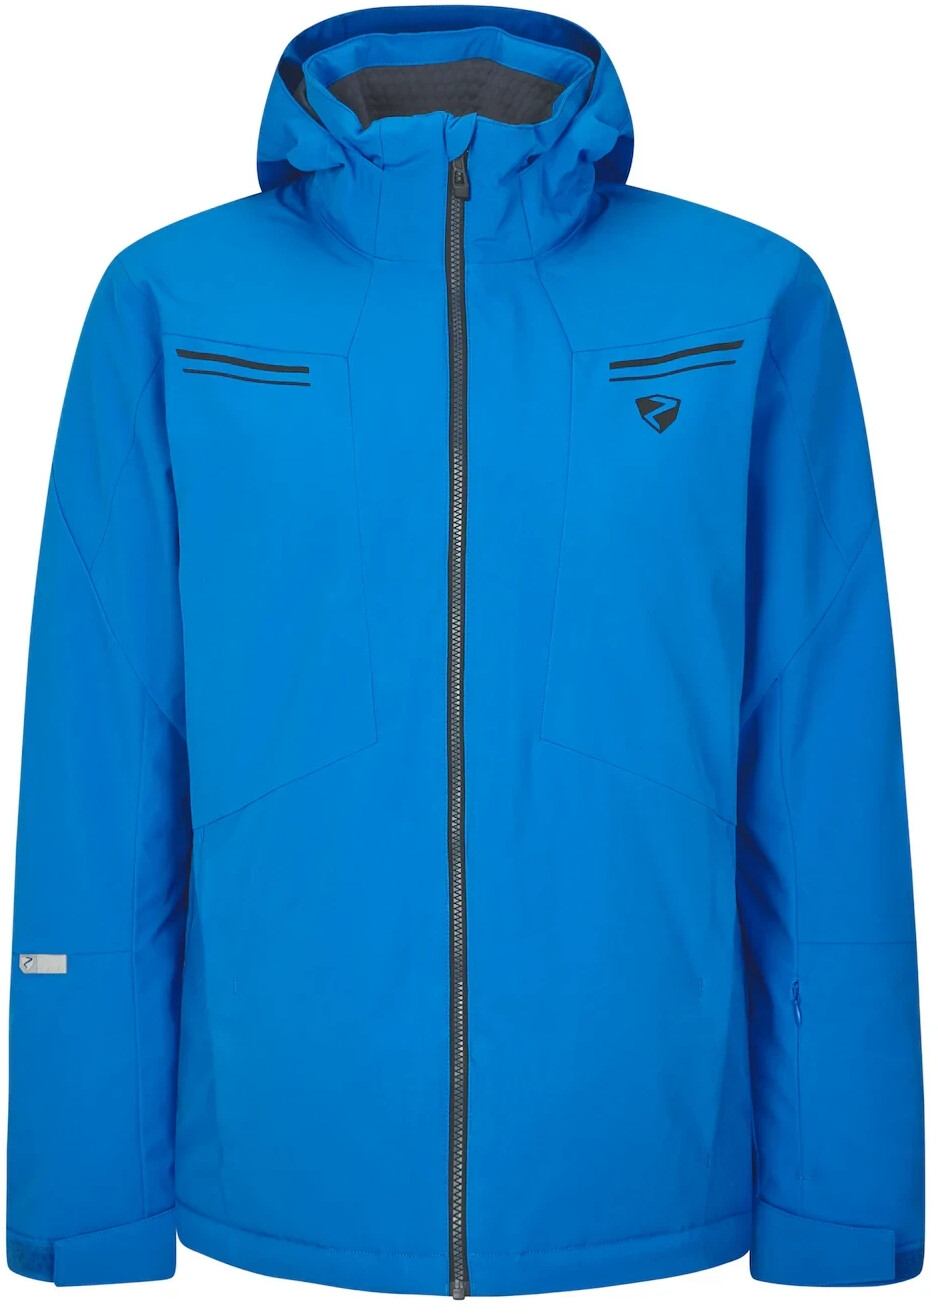 Ziener Tafar Jacket Ski persian blue ab 125,72 € | Preisvergleich bei